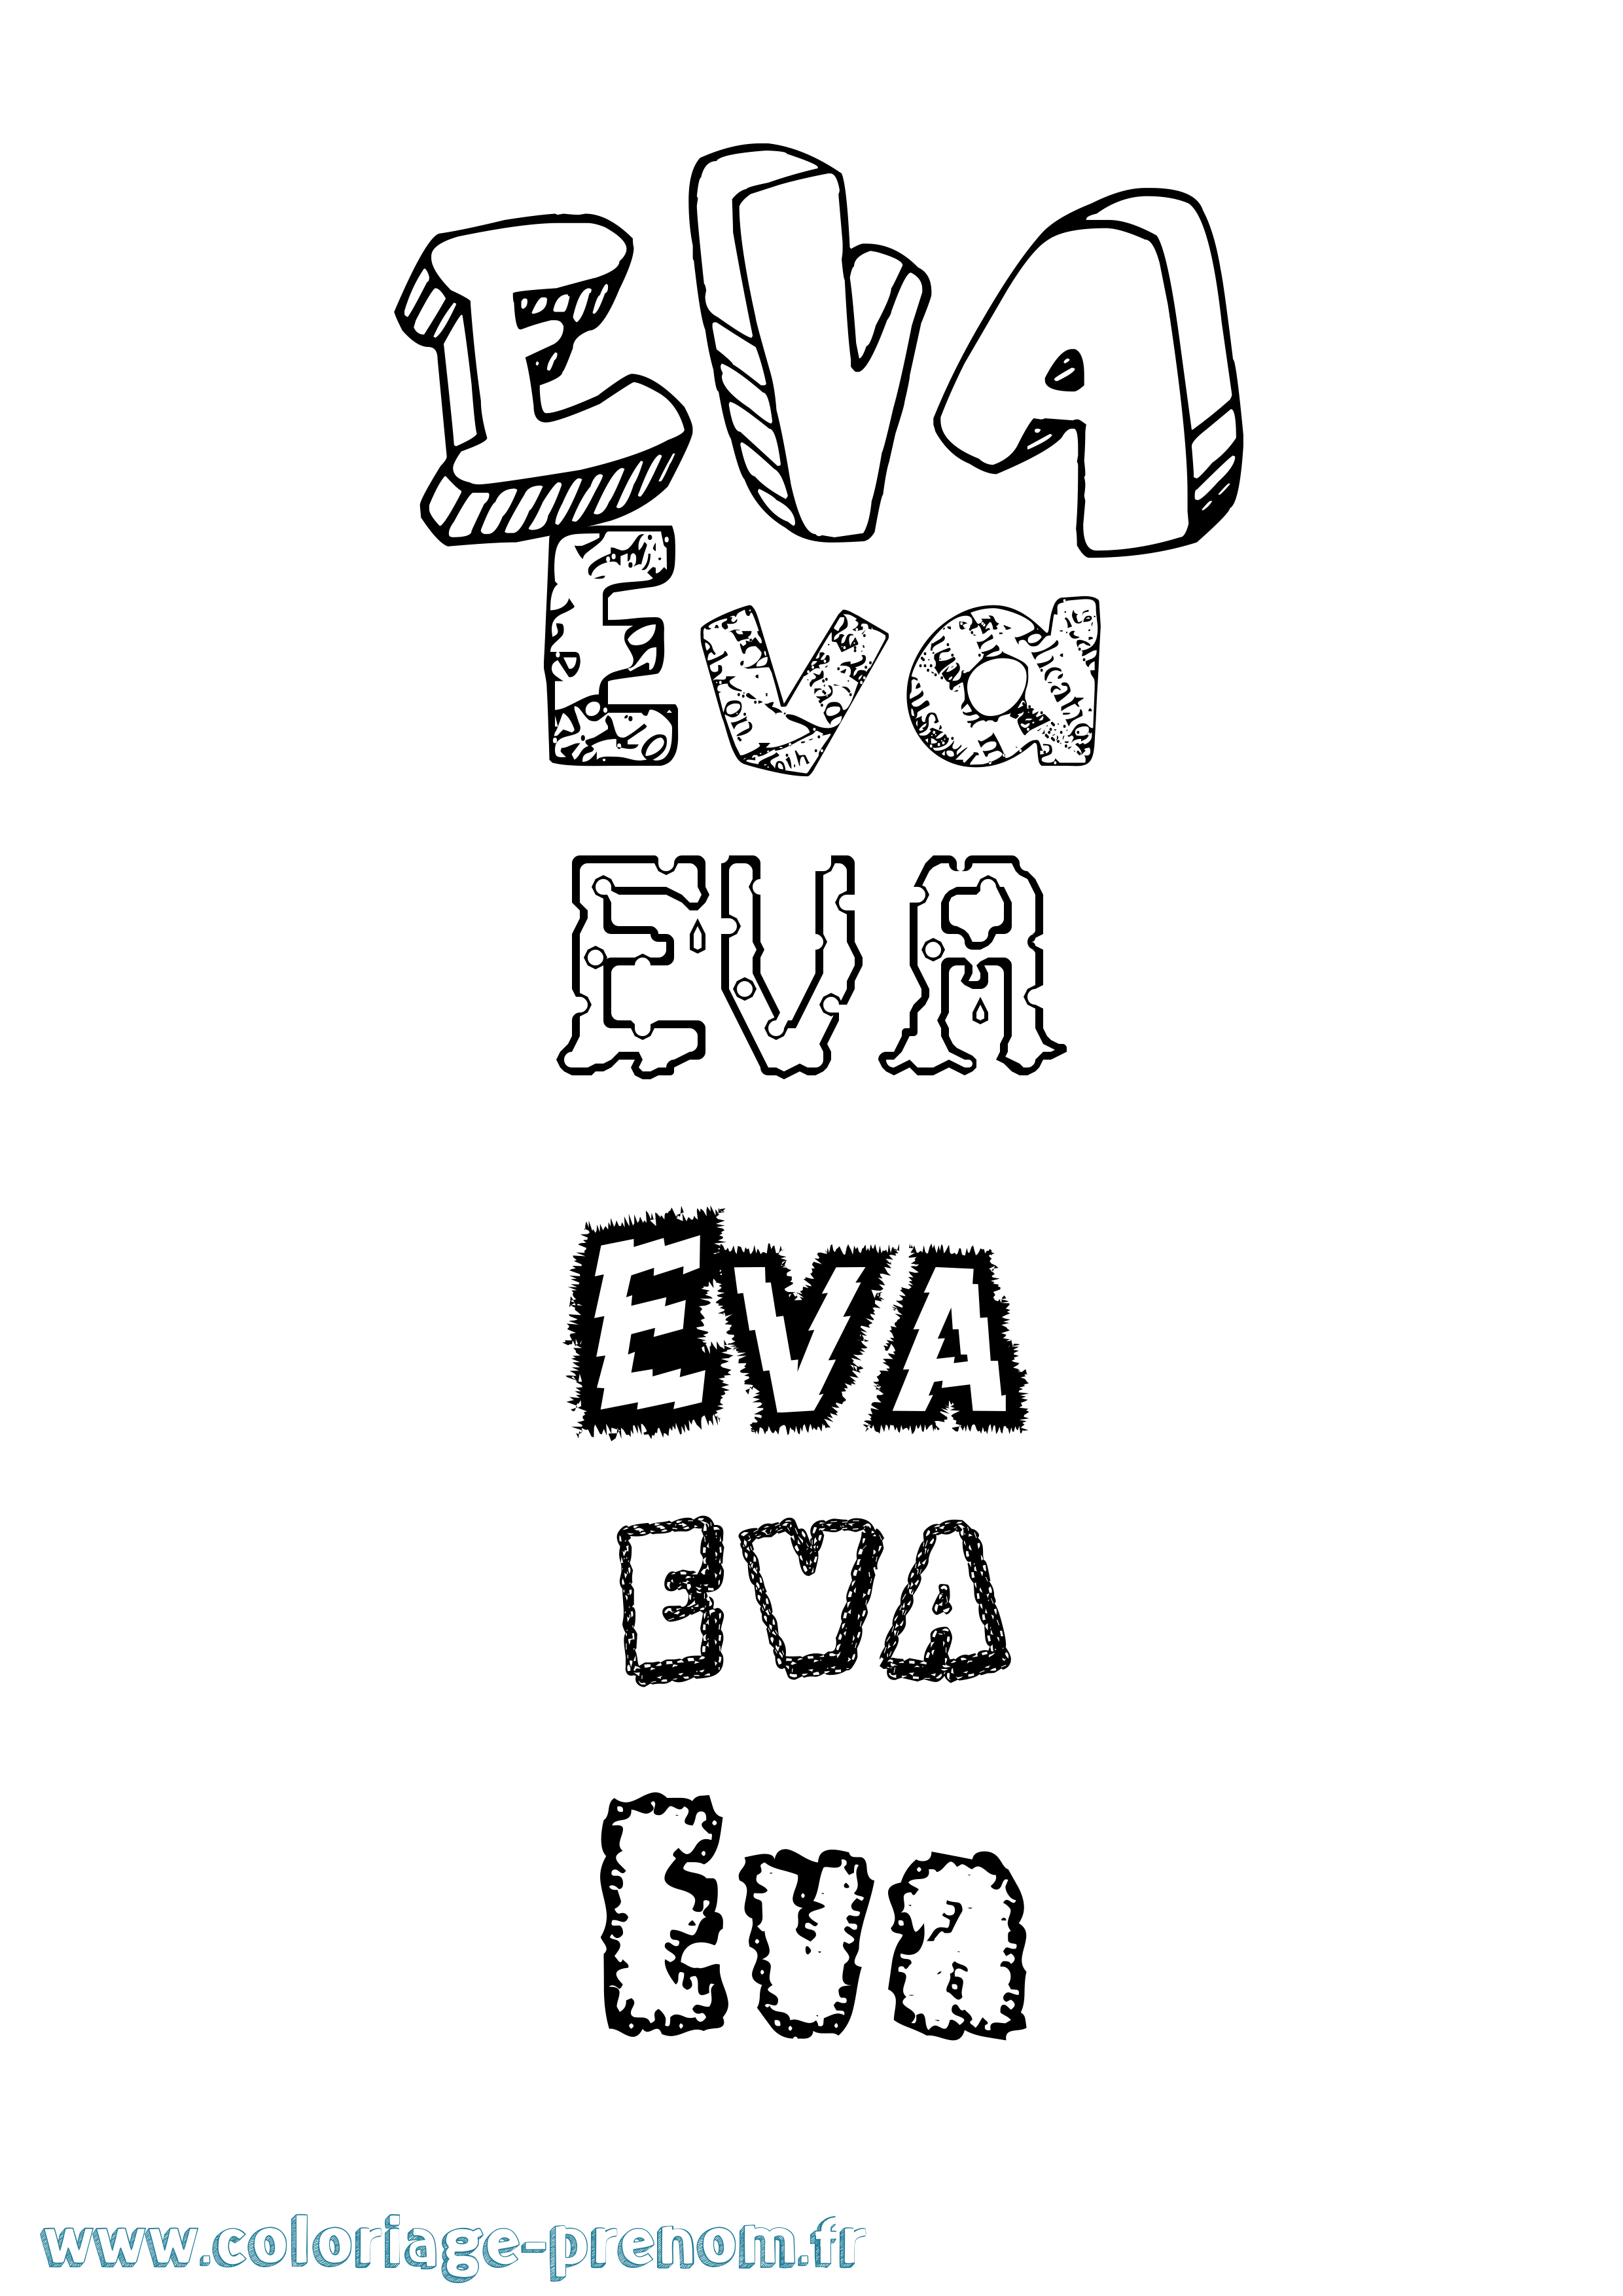 Coloriage prénom Eva Destructuré